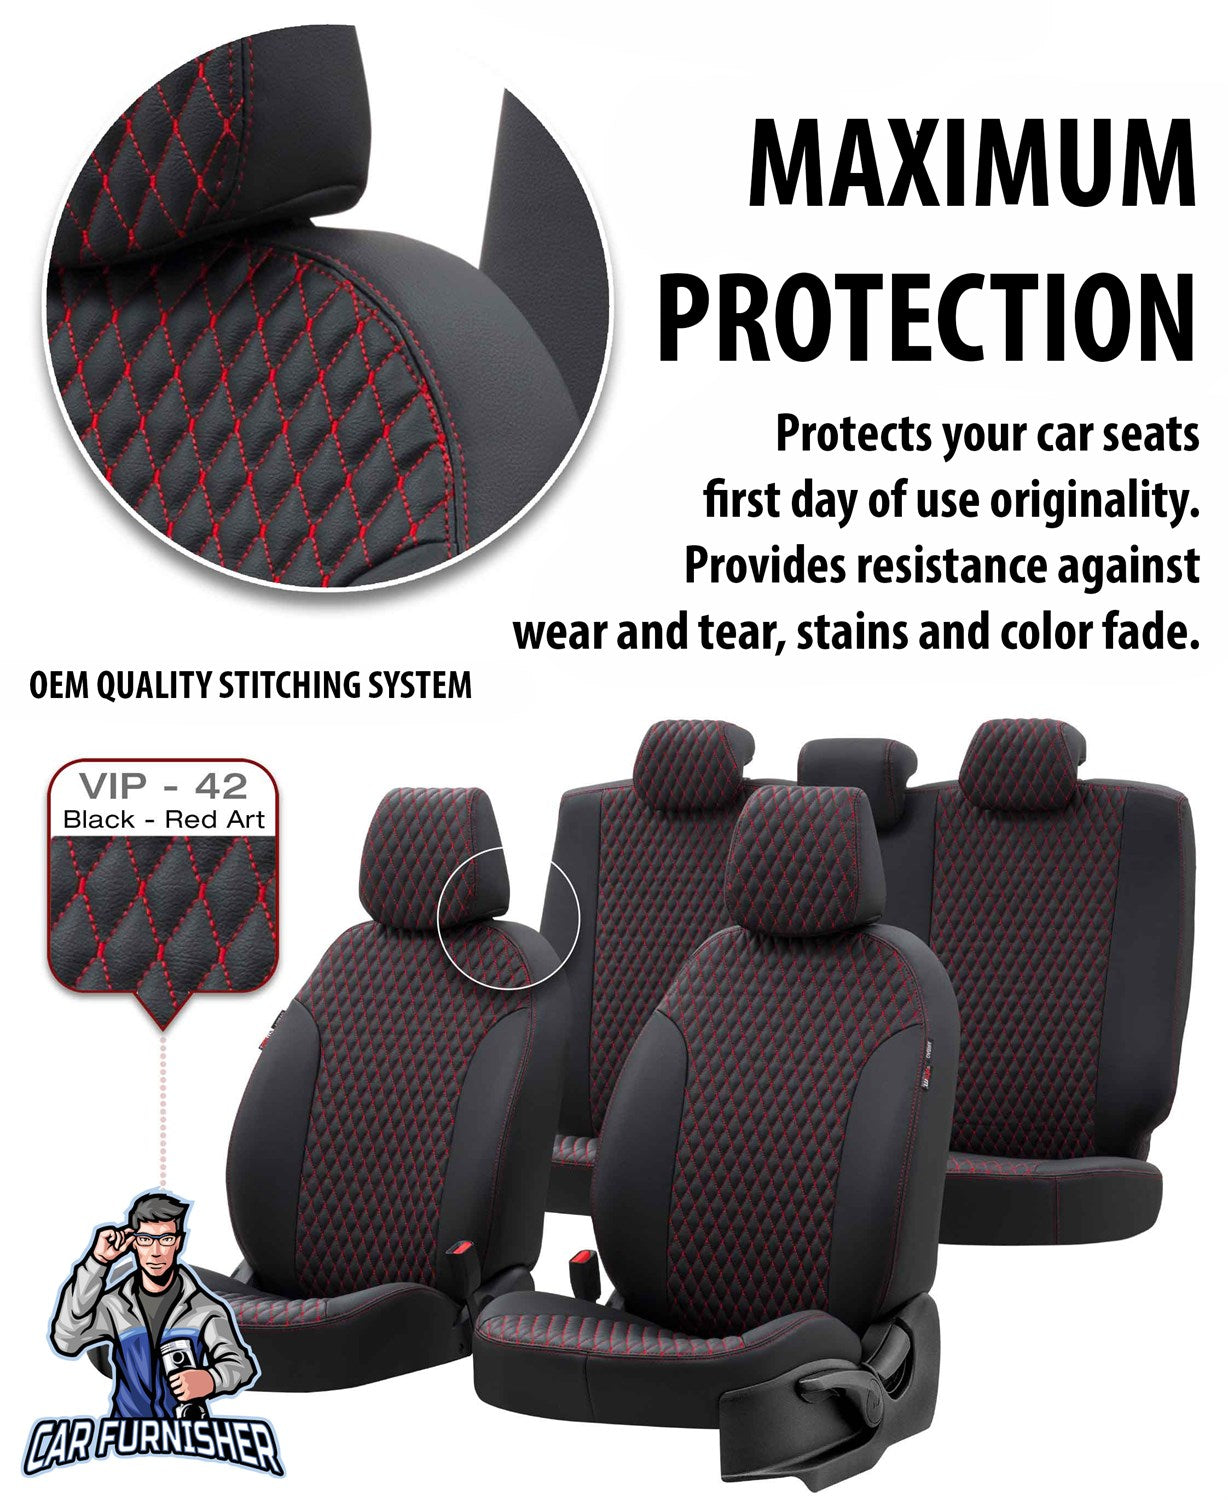 Volkswagen Tiguan Seat Cover Amsterdam Leather Design Black Leather